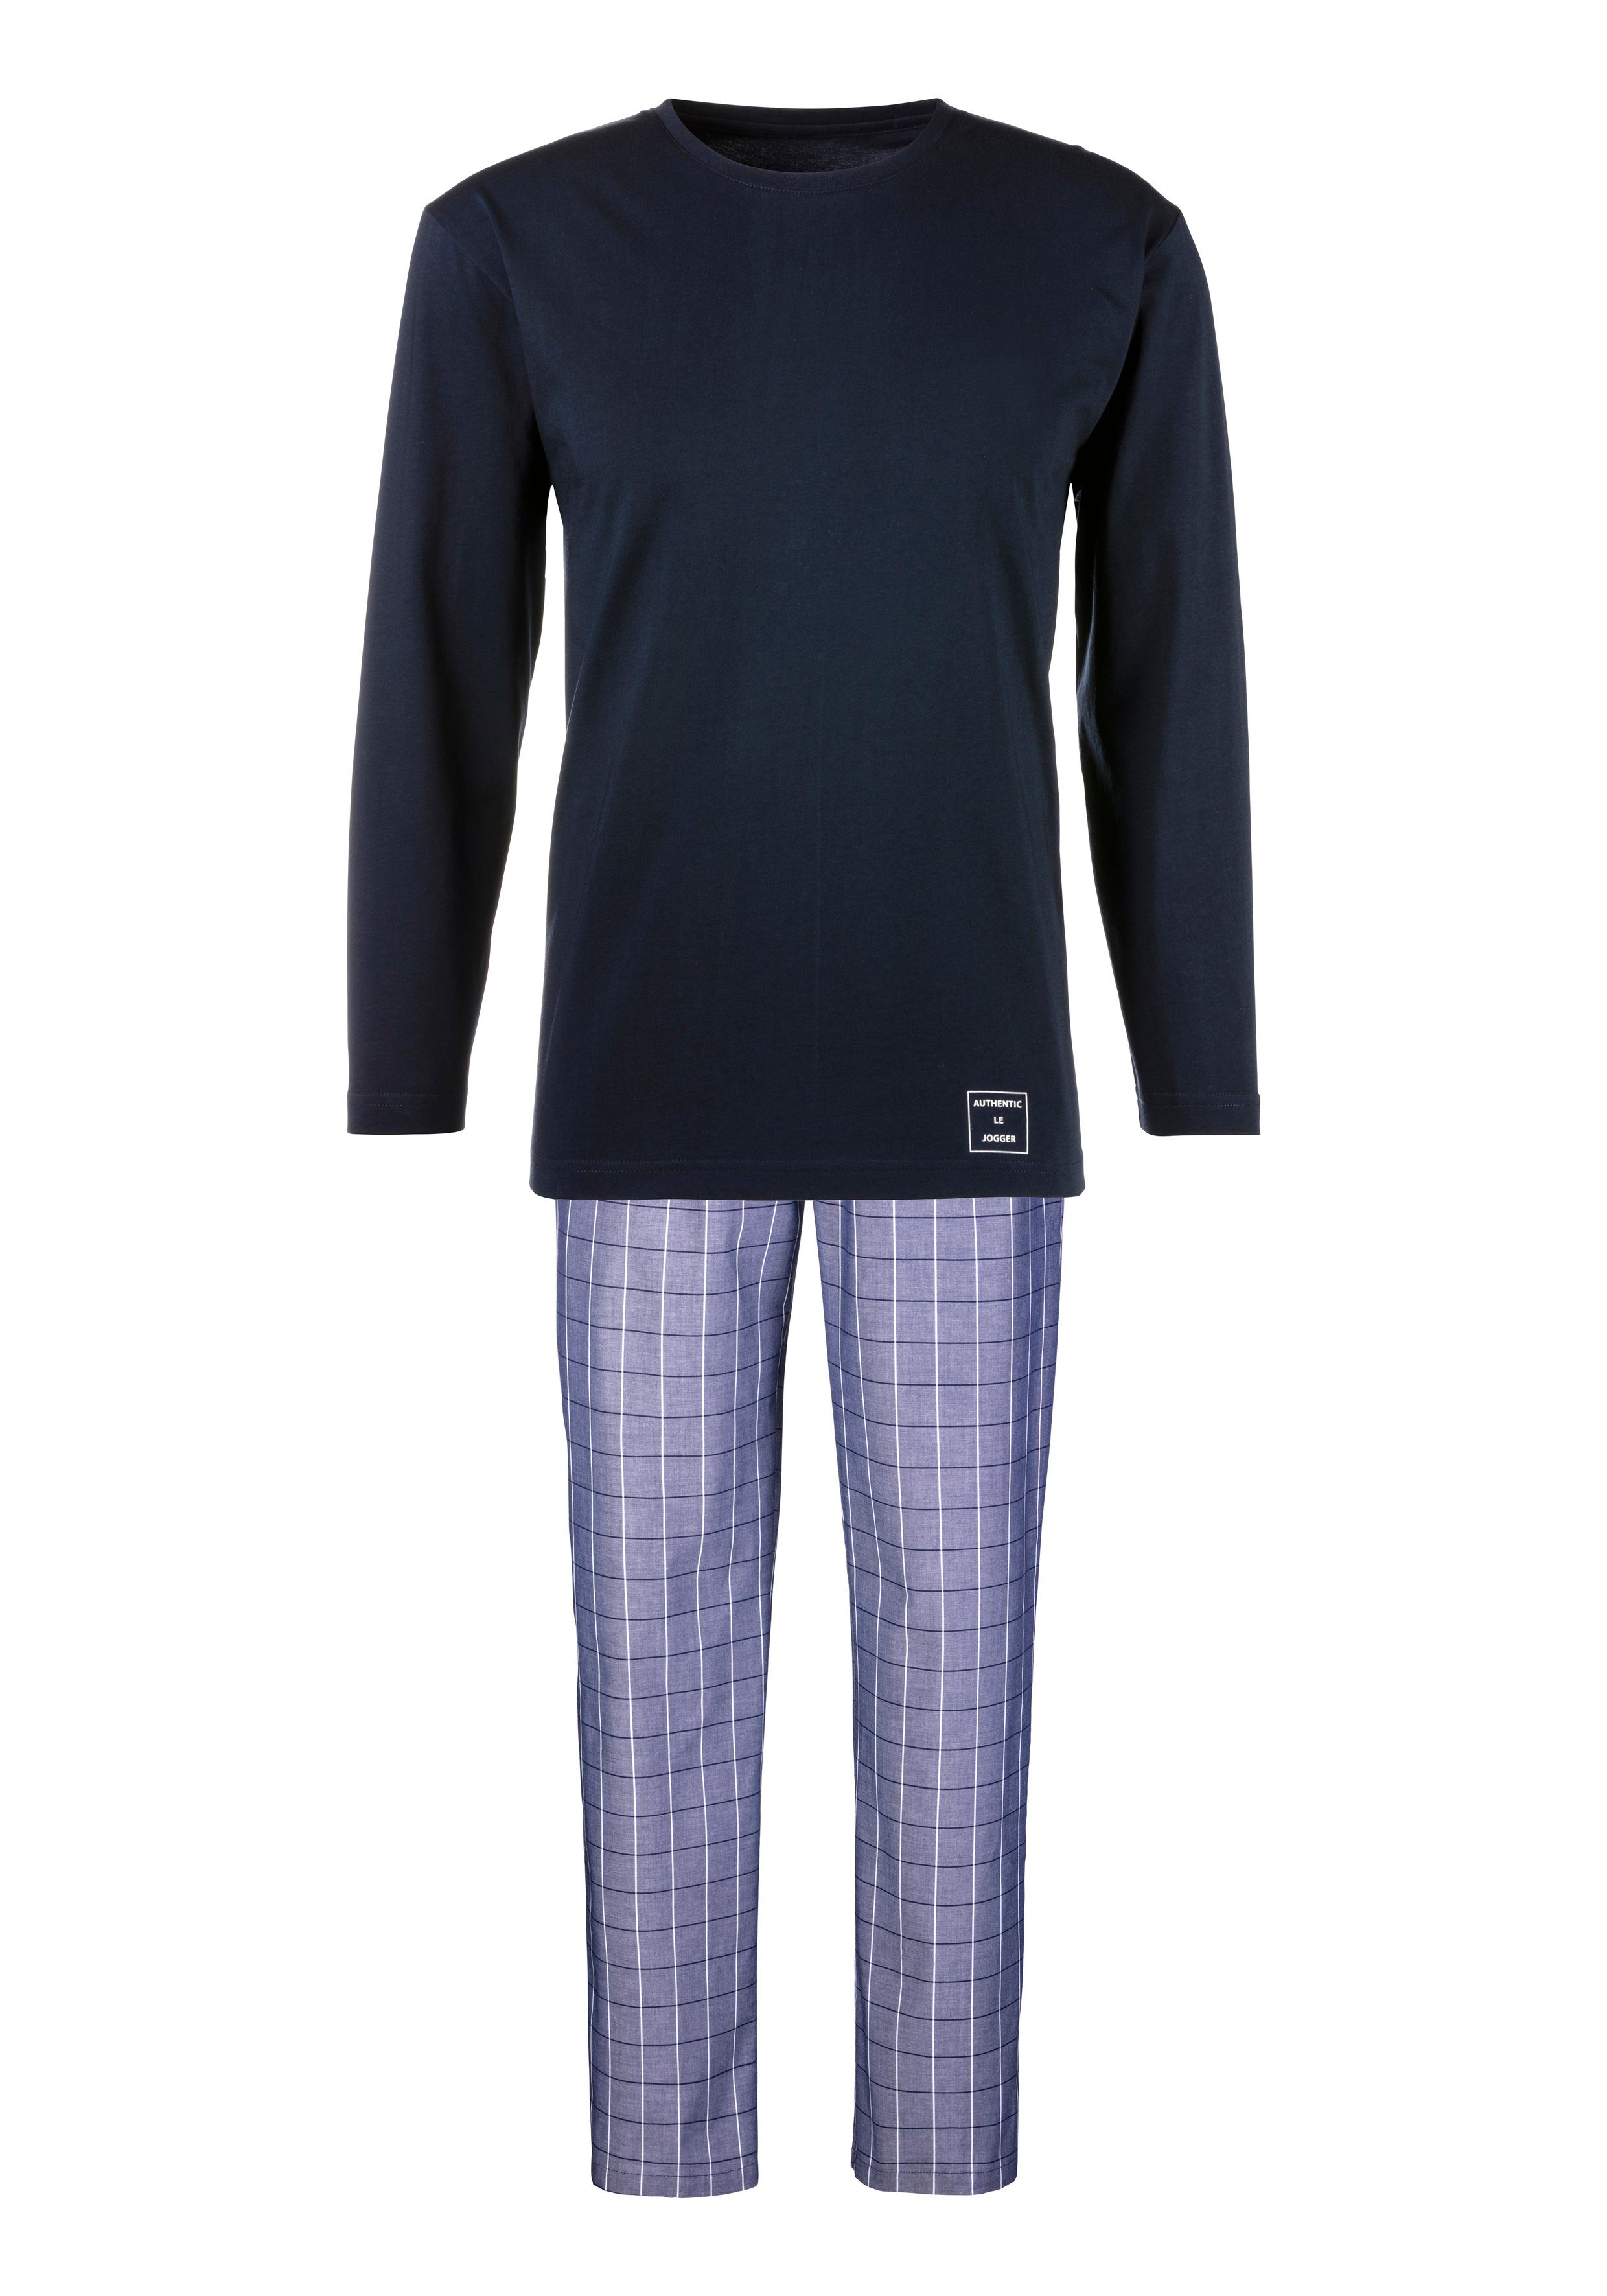 AUTHENTIC LE JOGGER Pyjama (2 tlg., 1 Stück) mit karierter Webhose navy-grau-kariert